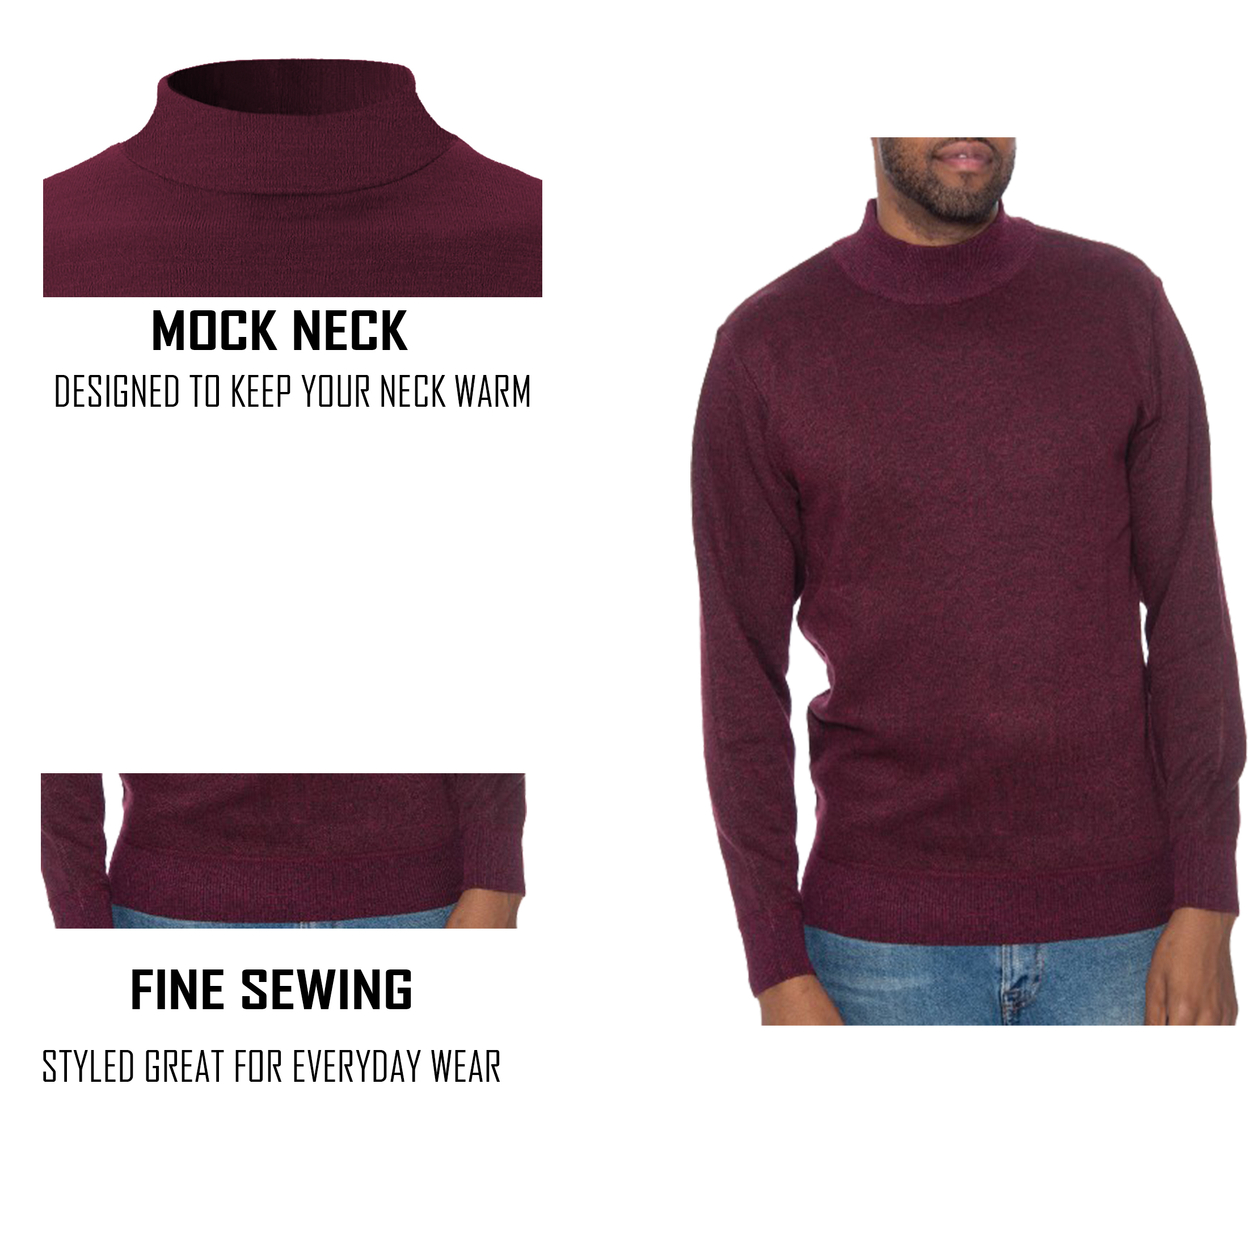 2-Pack: Men's Winter Warm Cozy Knit Slim Fit Mock Neck Sweater - White & Grey, Medium